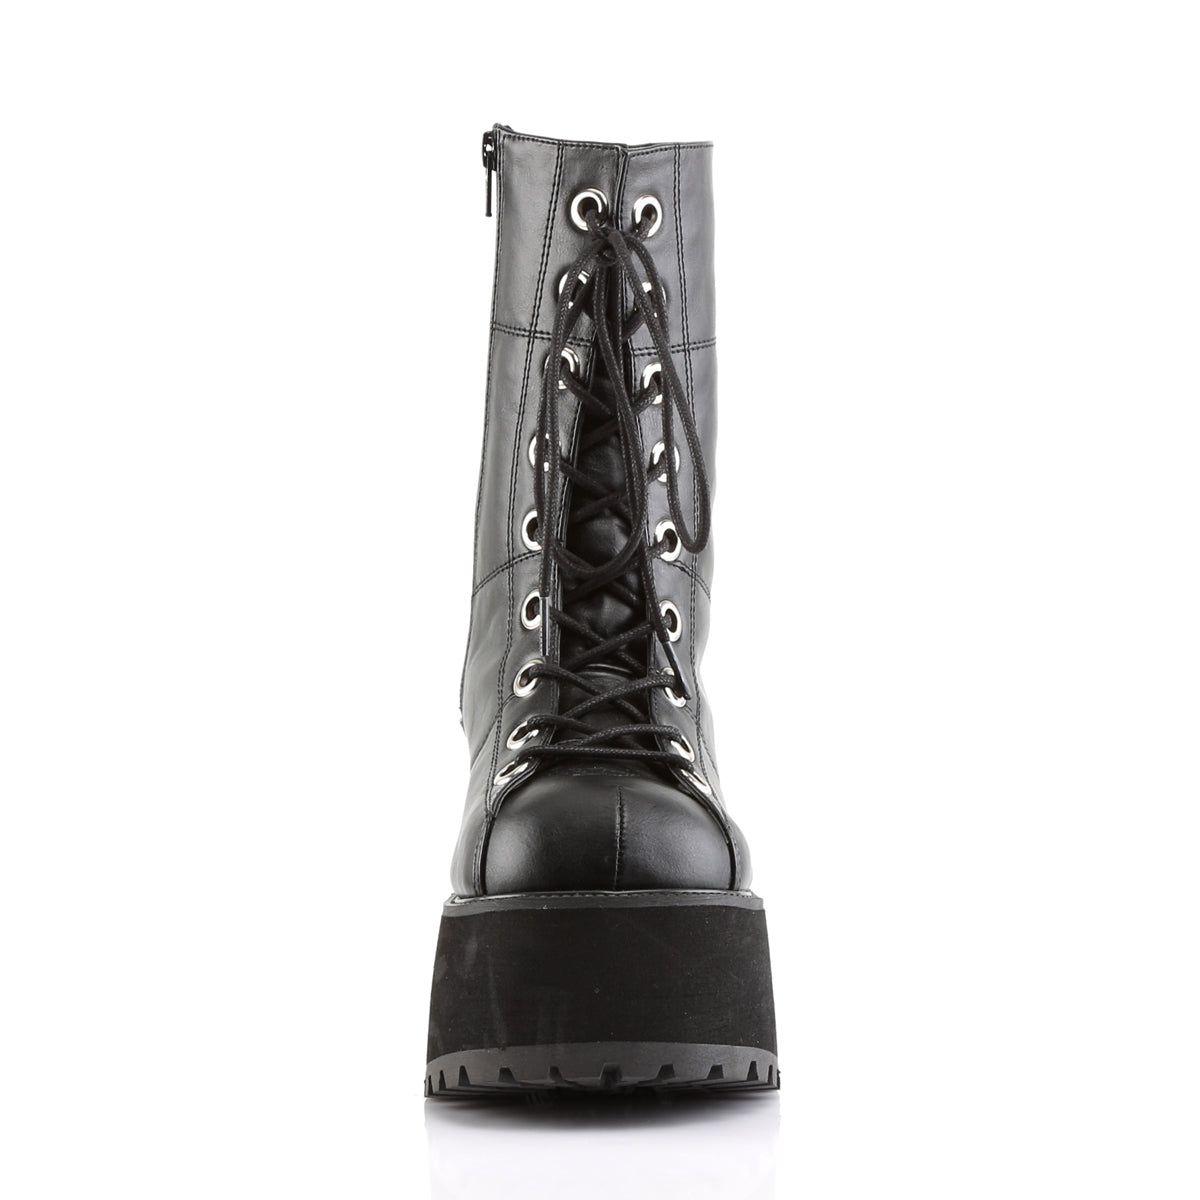 RANGER-301 Black Vegan Leather Calf Boot Demonia